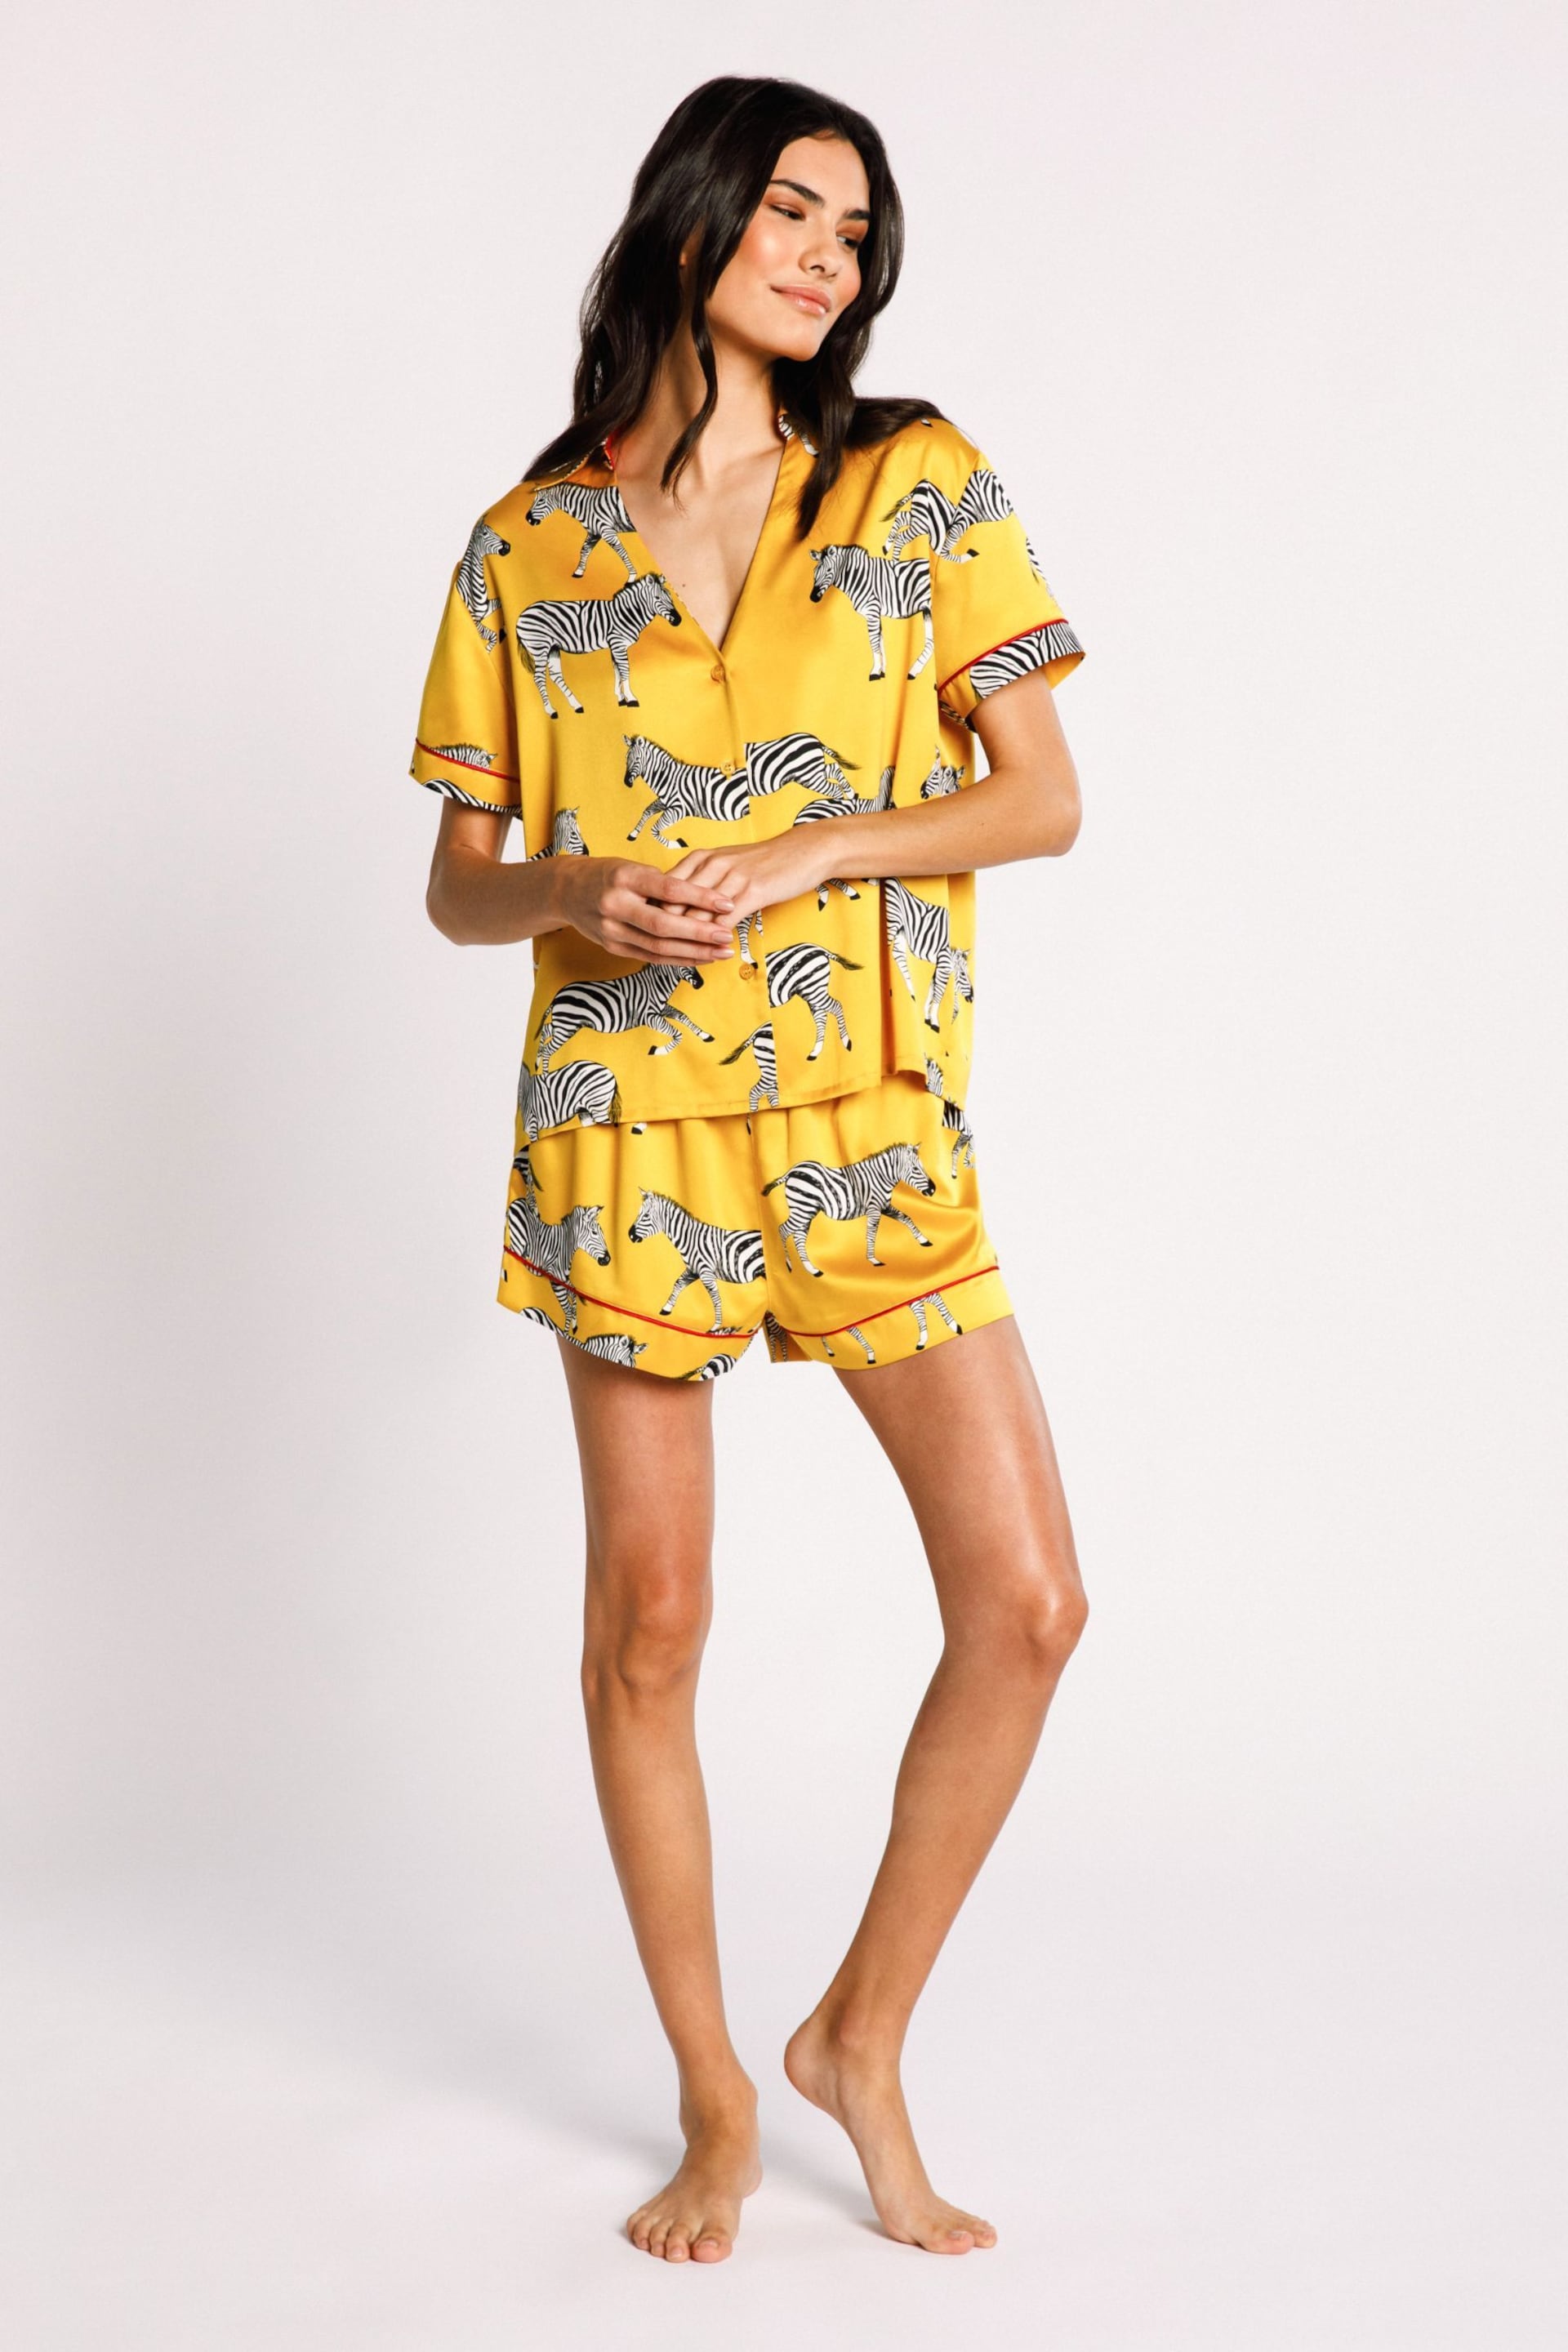 Chelsea Peers Yellow Satin Short Pyjama Set - Image 1 of 5